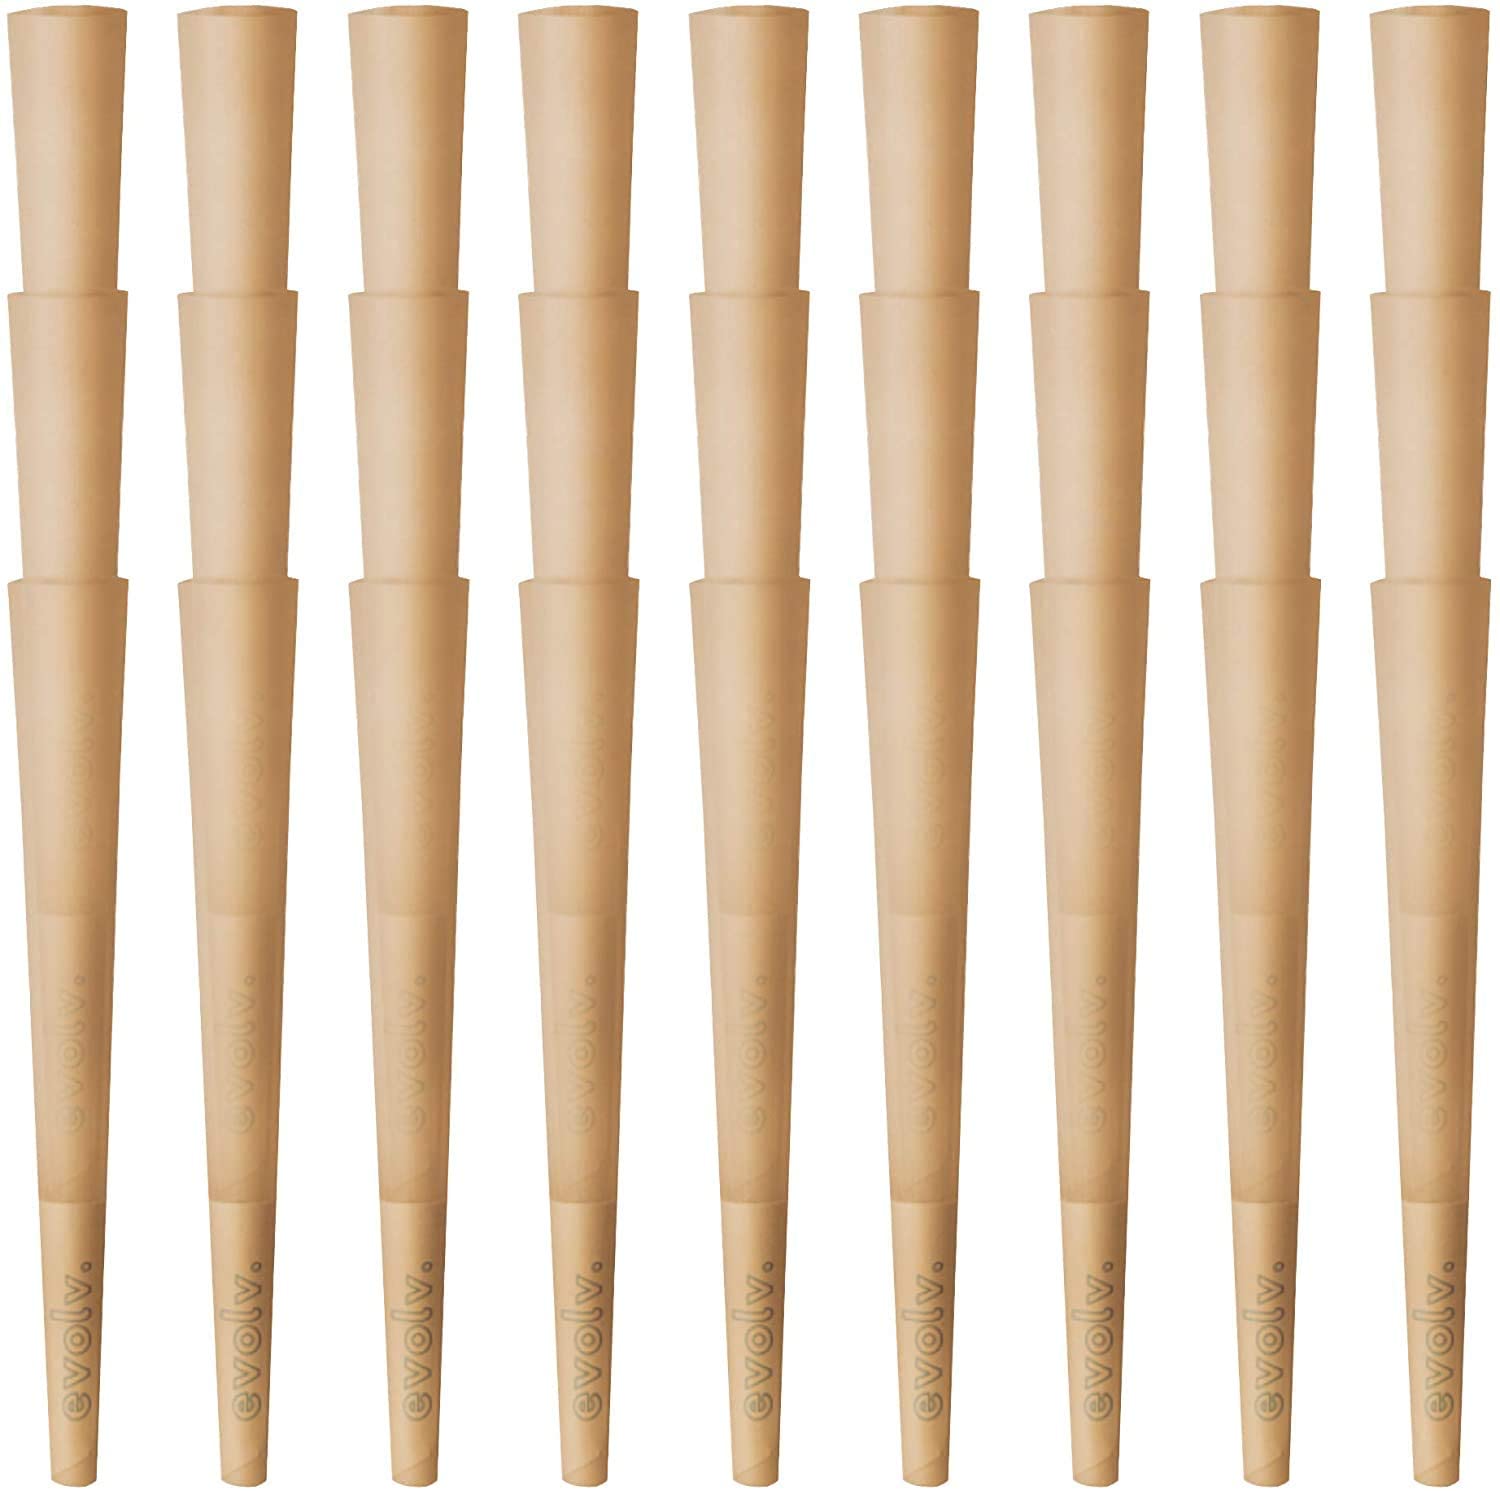 EVOLV Organic Hemp Pre-Rolled Cones | Size: M98 (98mm) | 800/Pack